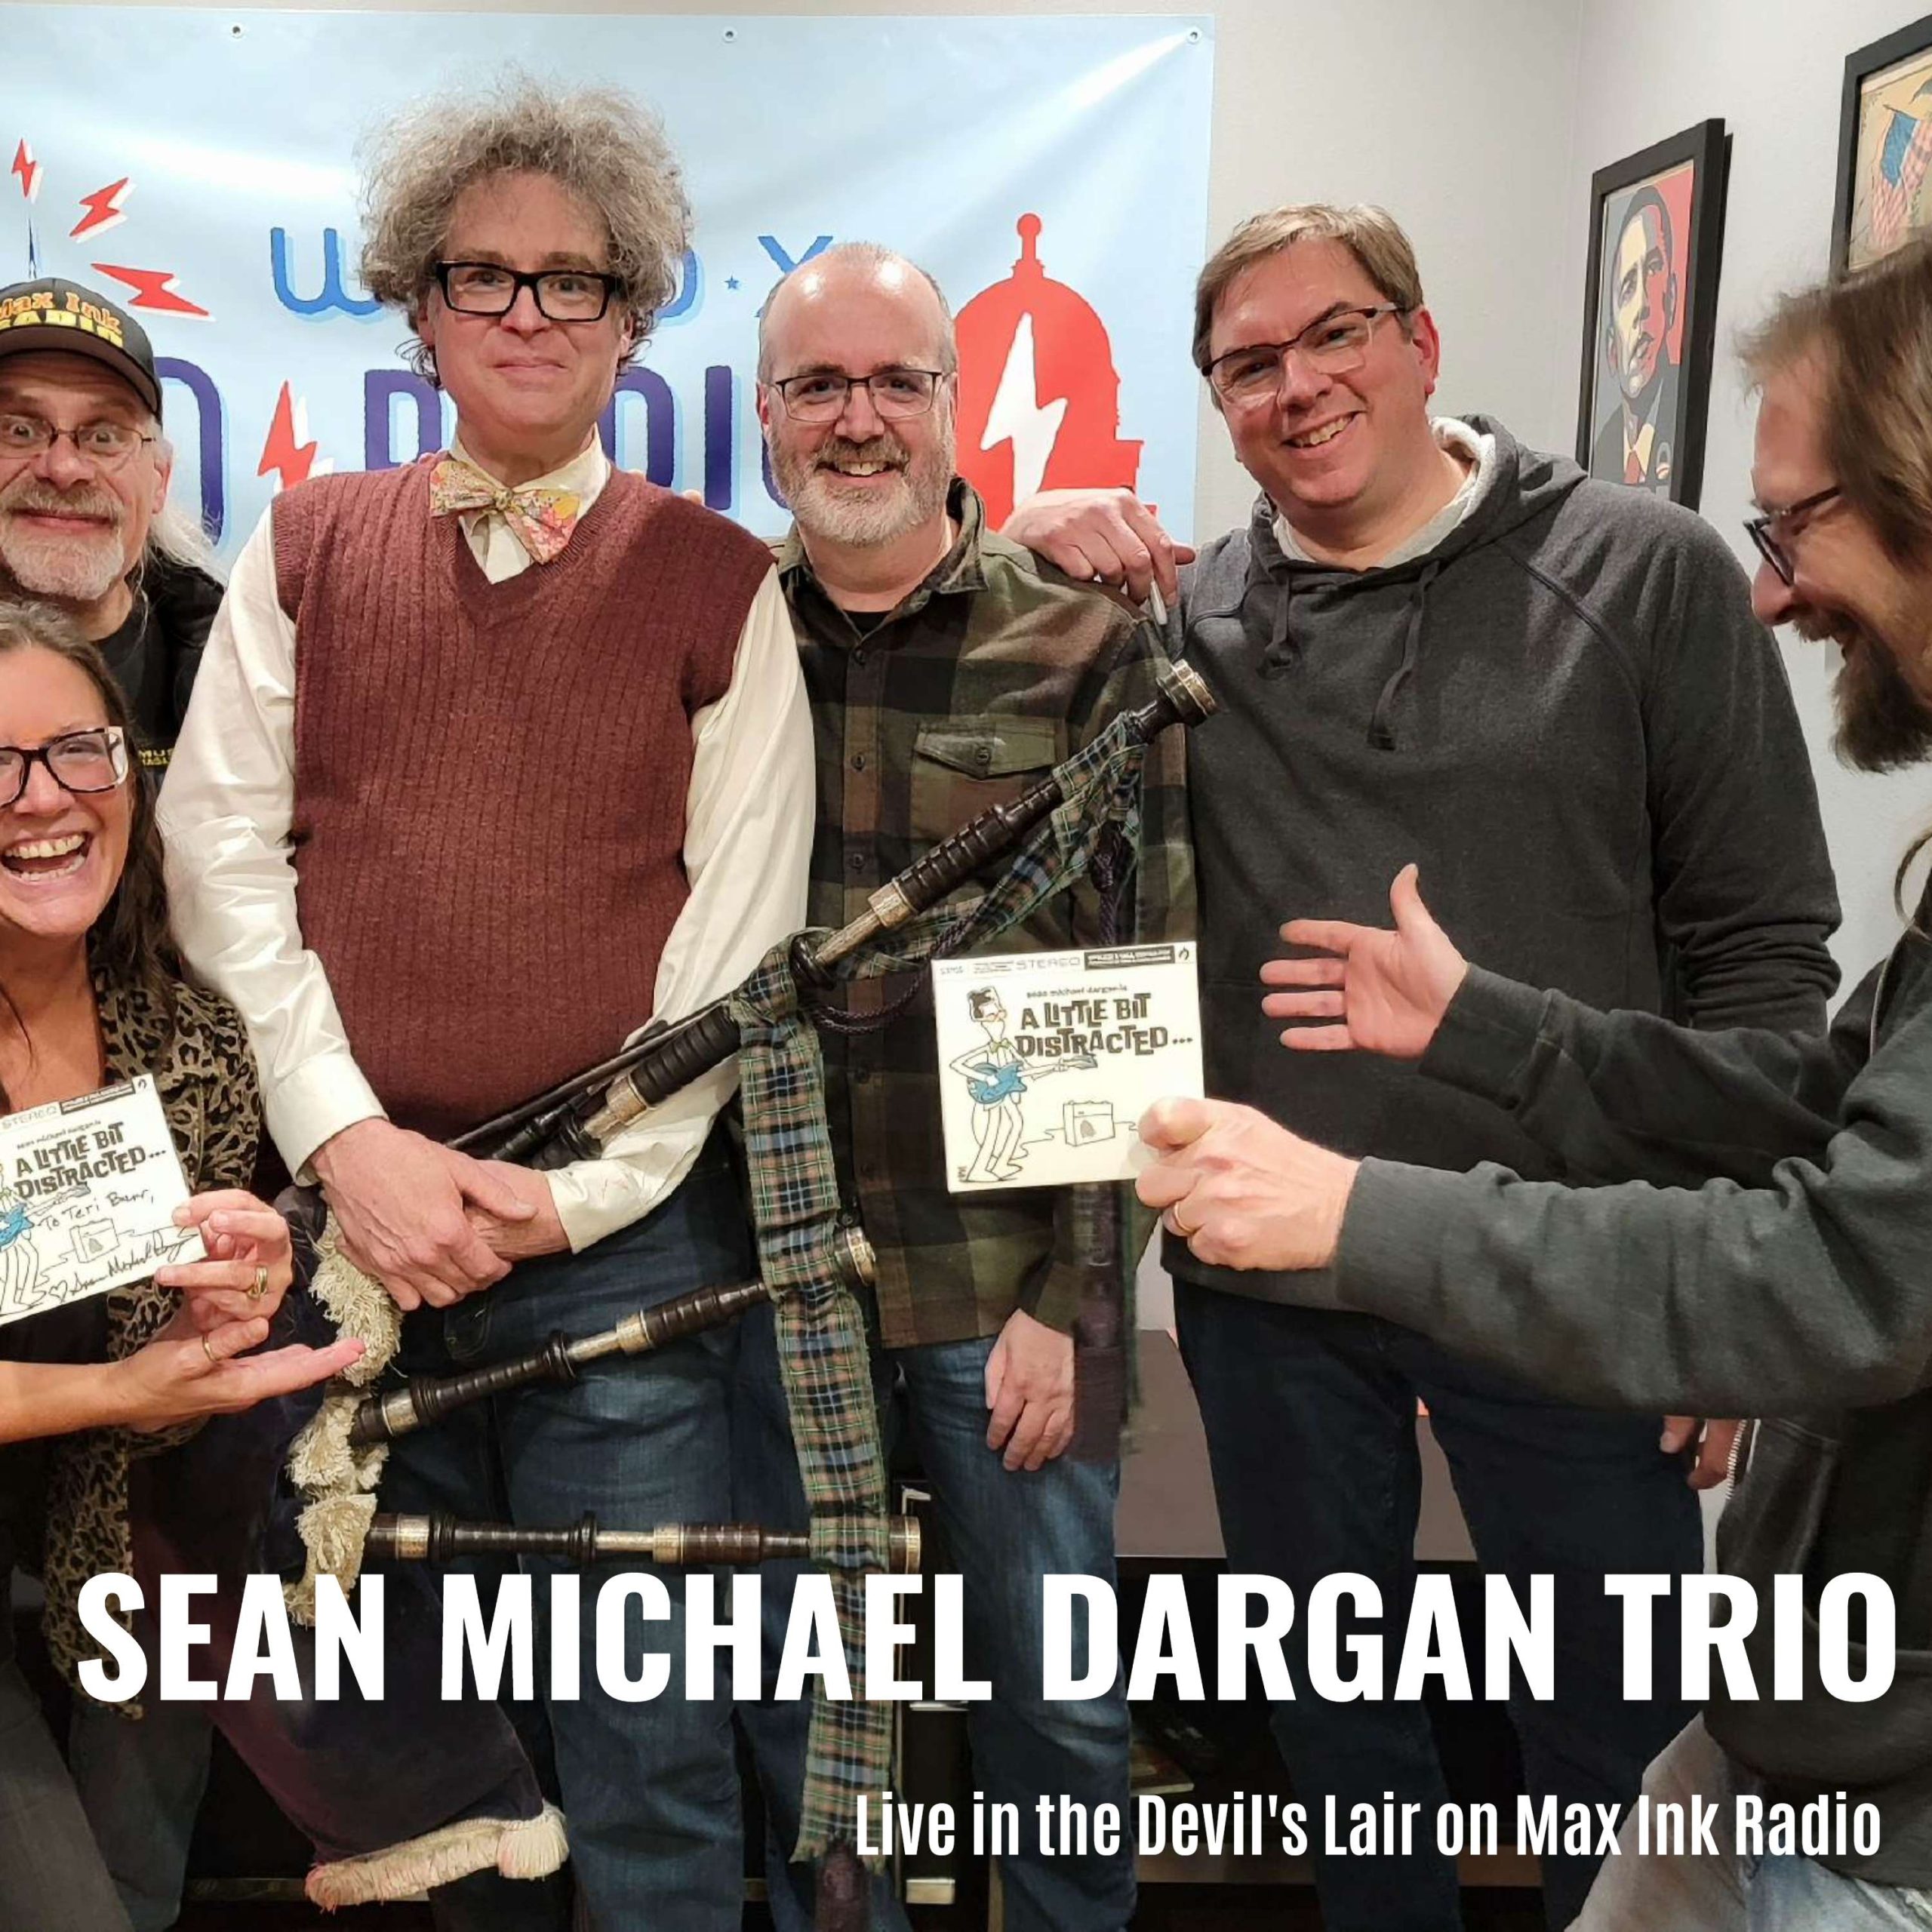 Sean Michael Dargan Trio with the Max Ink Crew